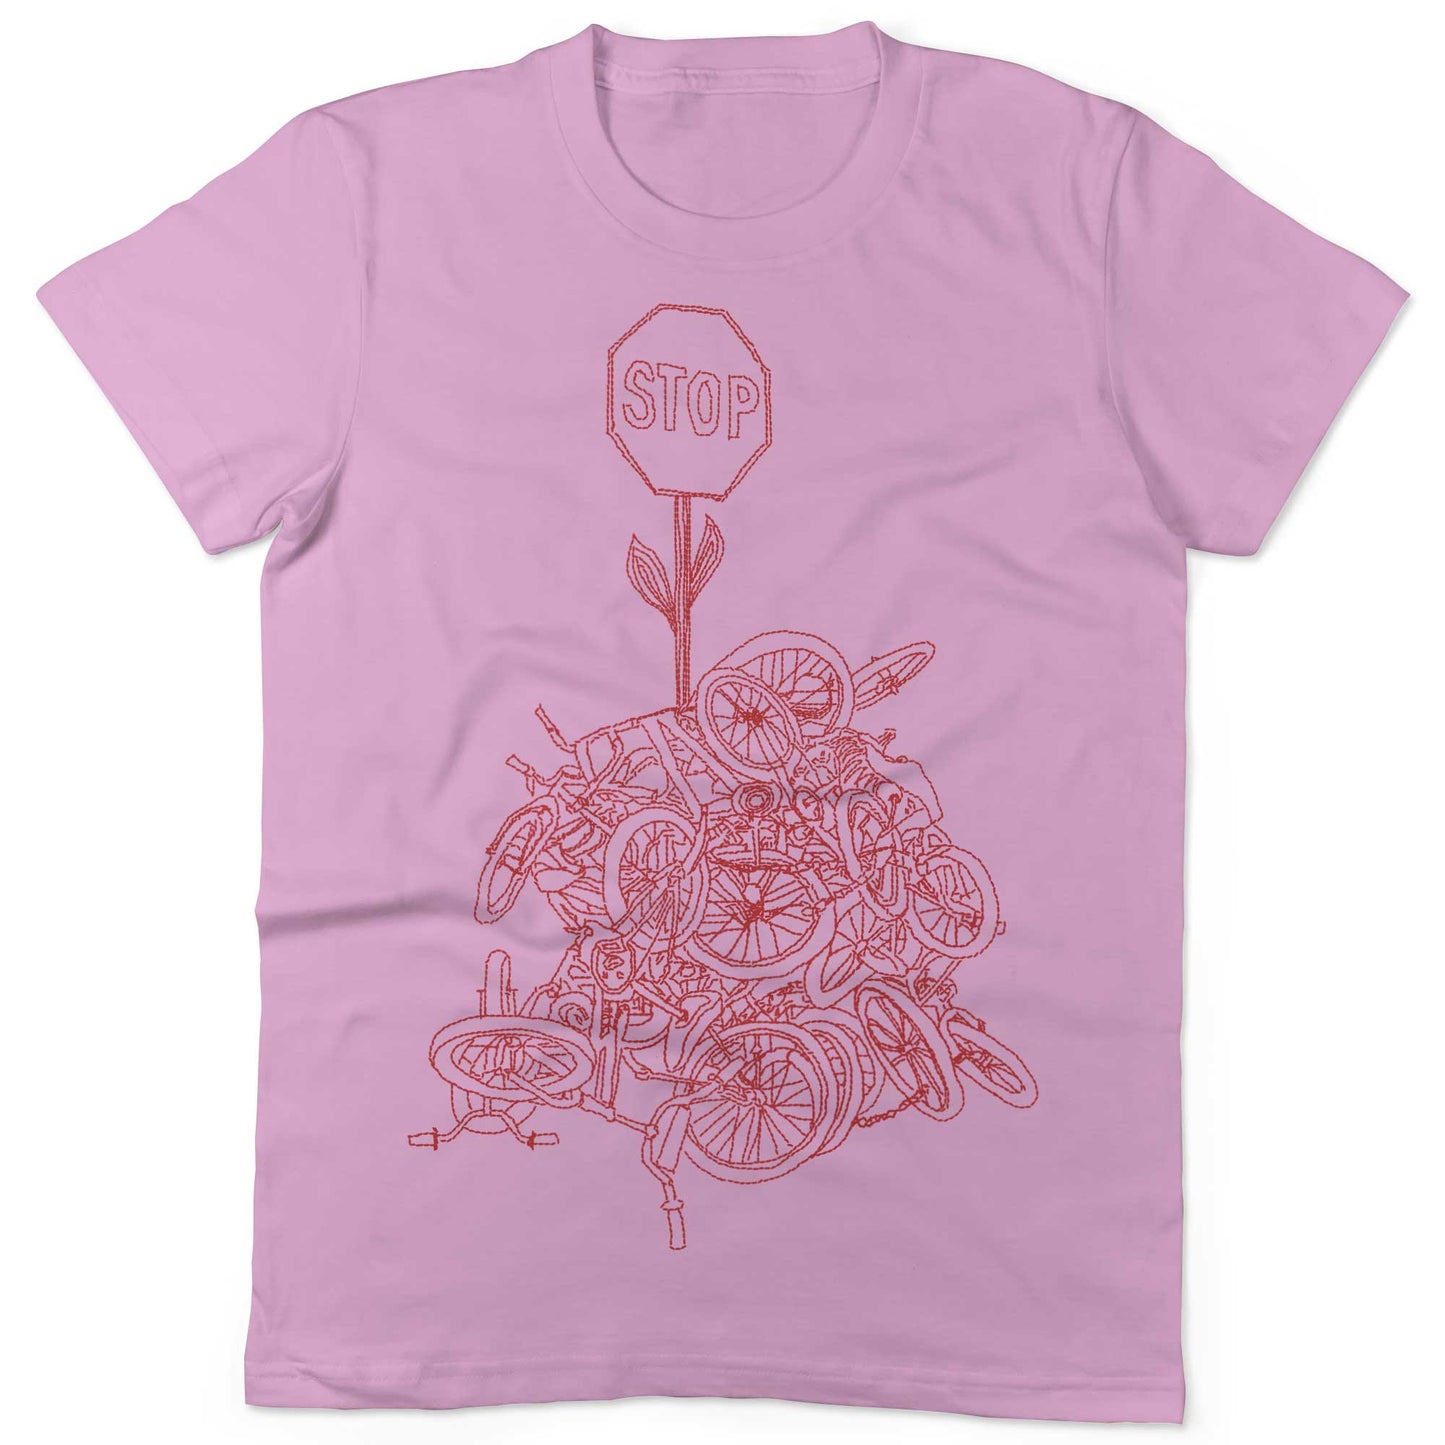 Zoo bomb Bike Pyle Unisex Or Women's Cotton T-shirt-Pink-Woman